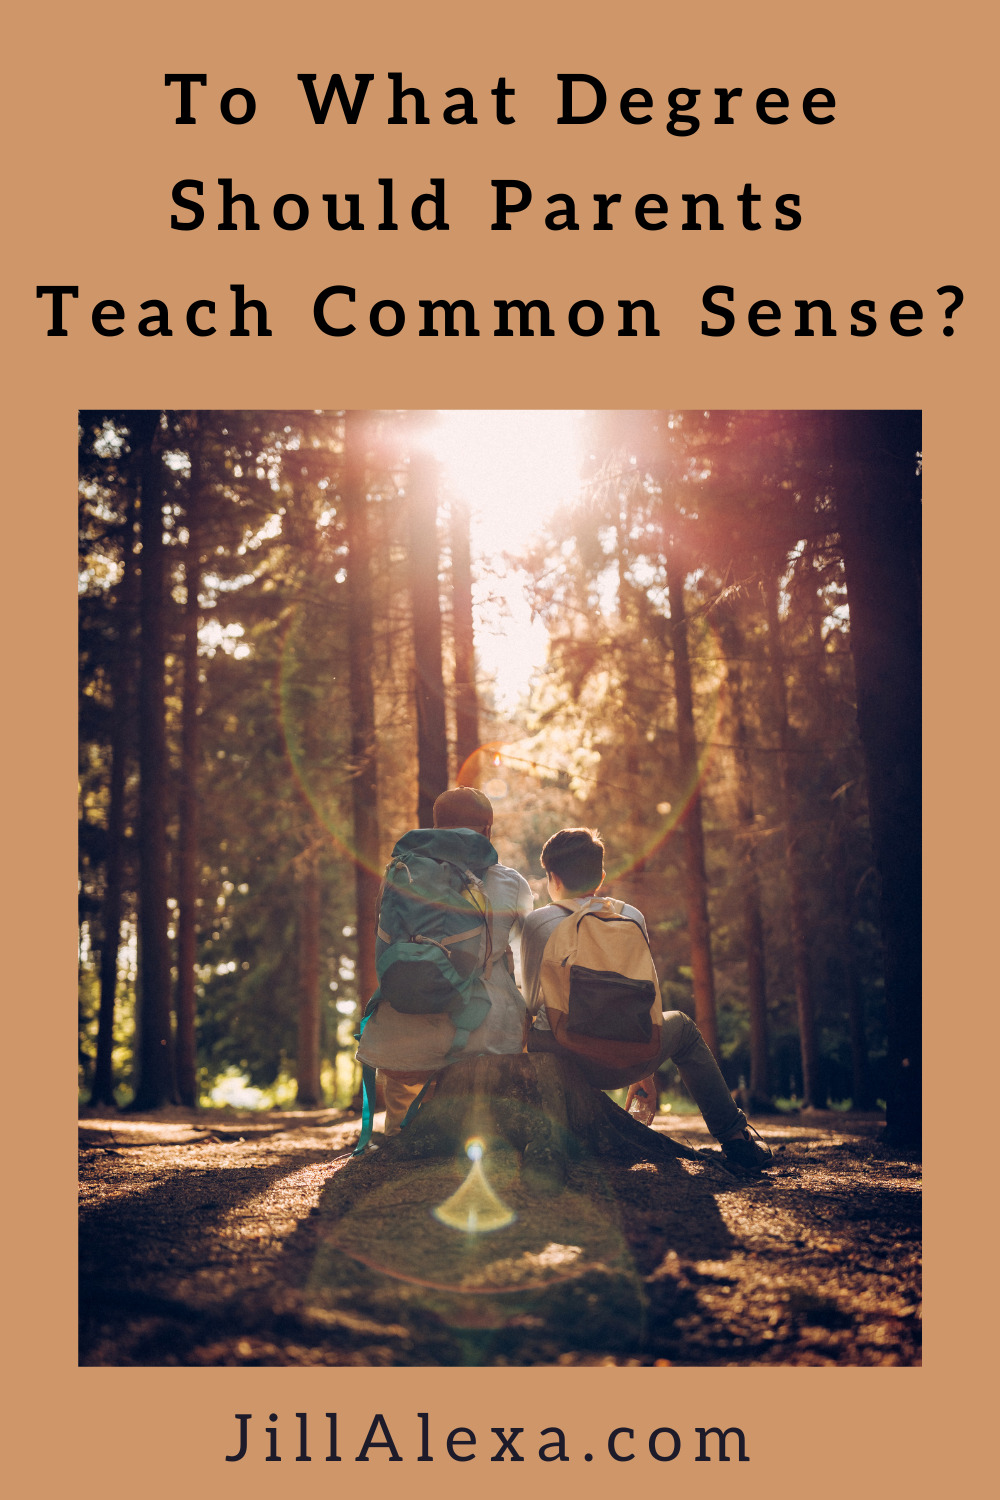 To What Degree Should Parents Teach "Common Sense?" | Common Sense Pin